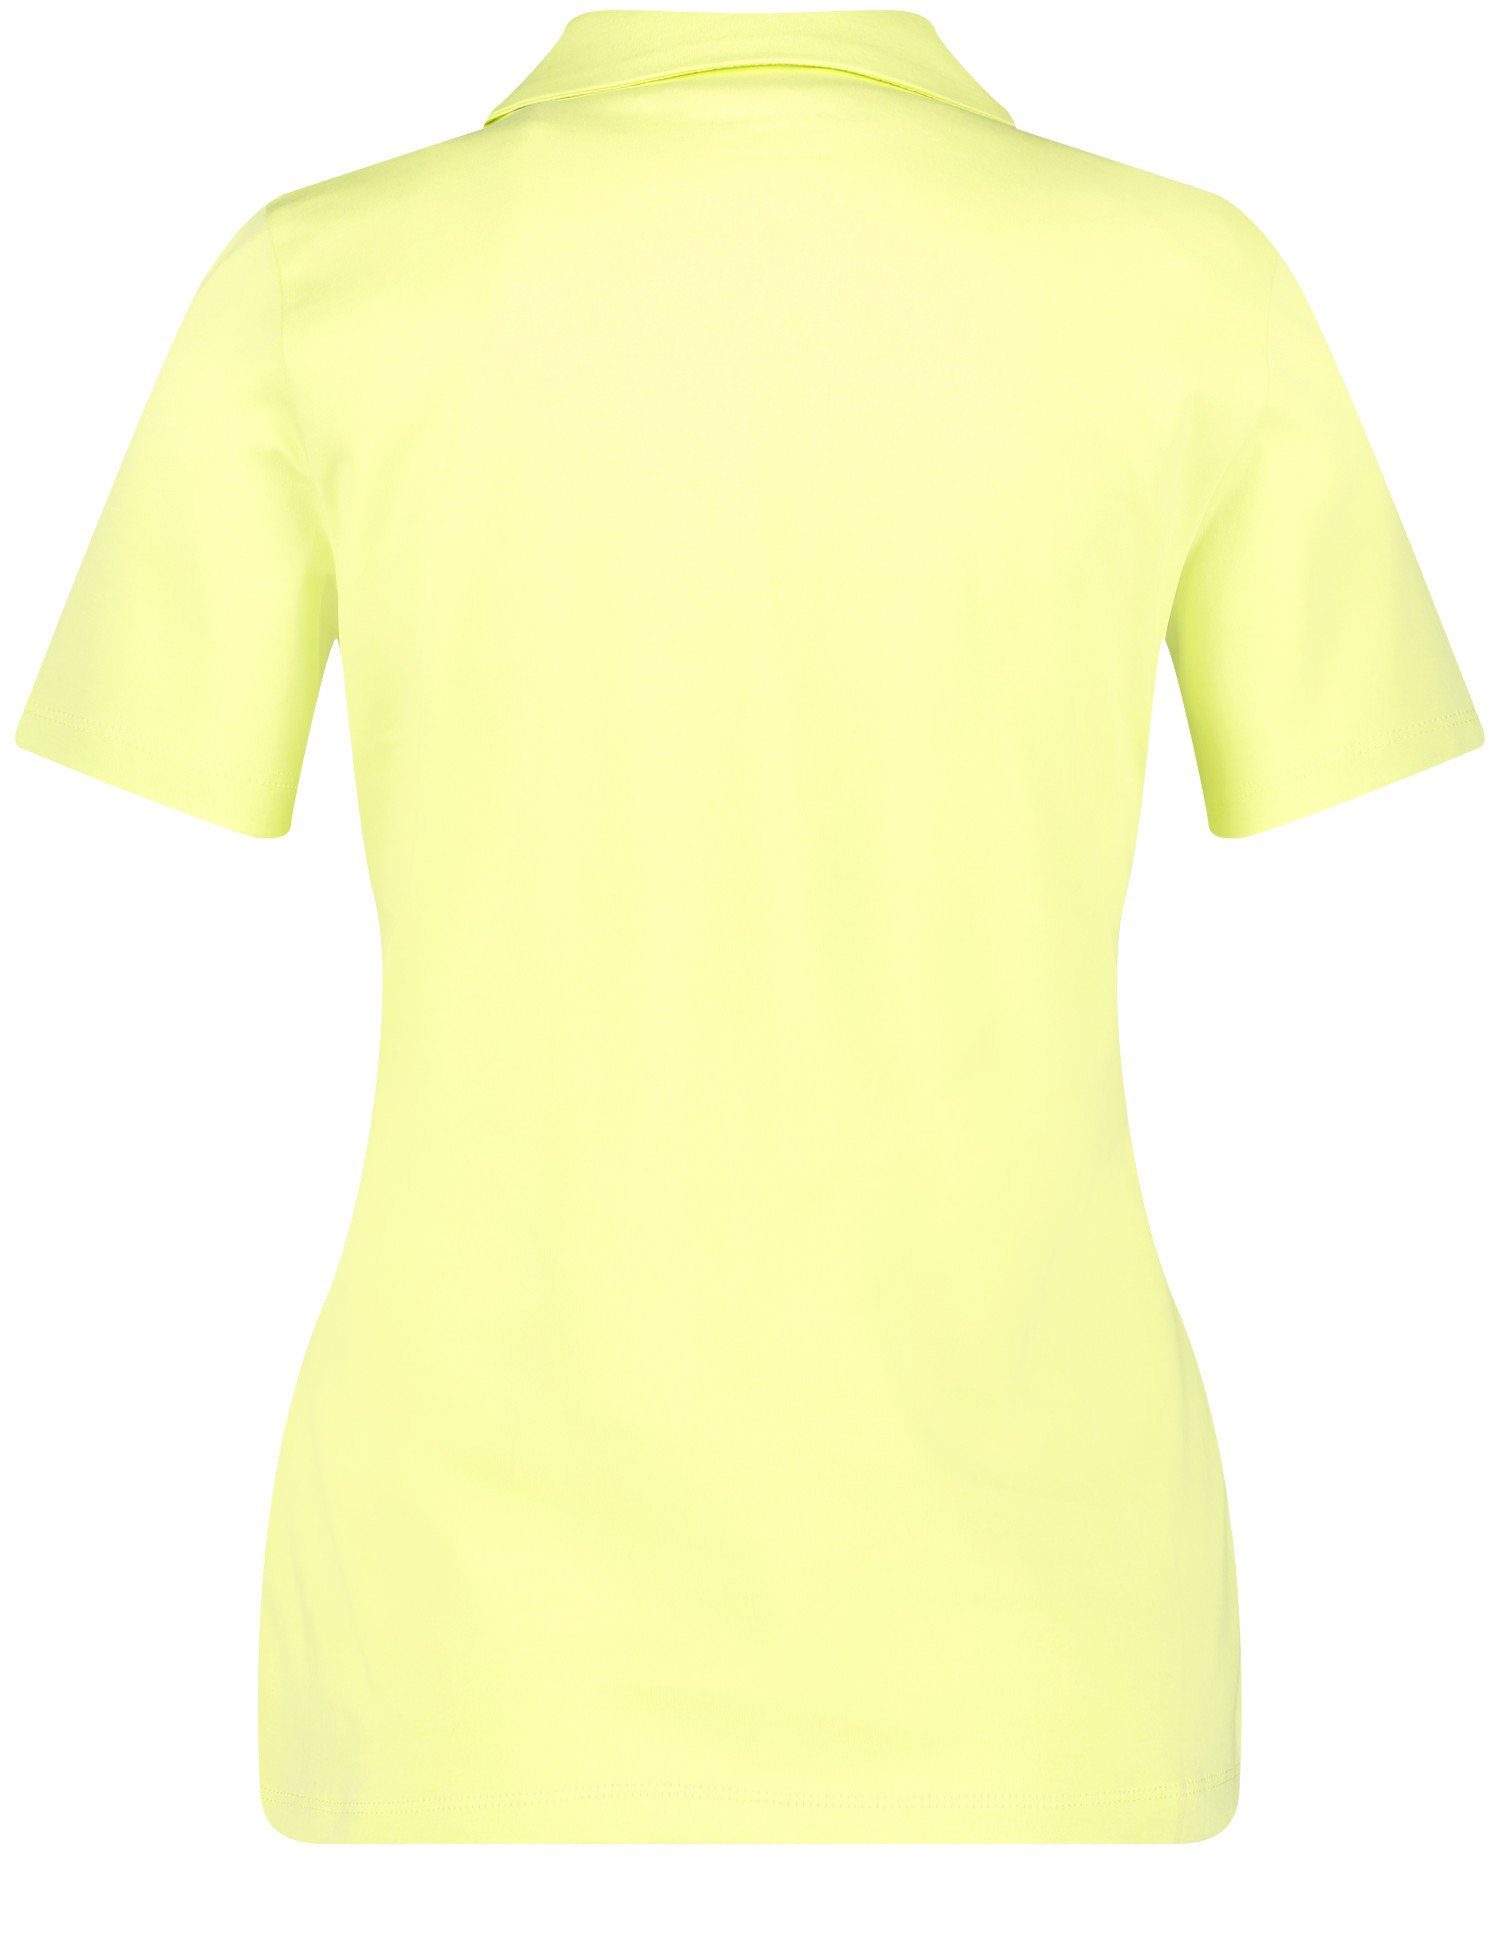 Lime GERRY Poloshirt Kurzarm Poloshirt WEBER Light